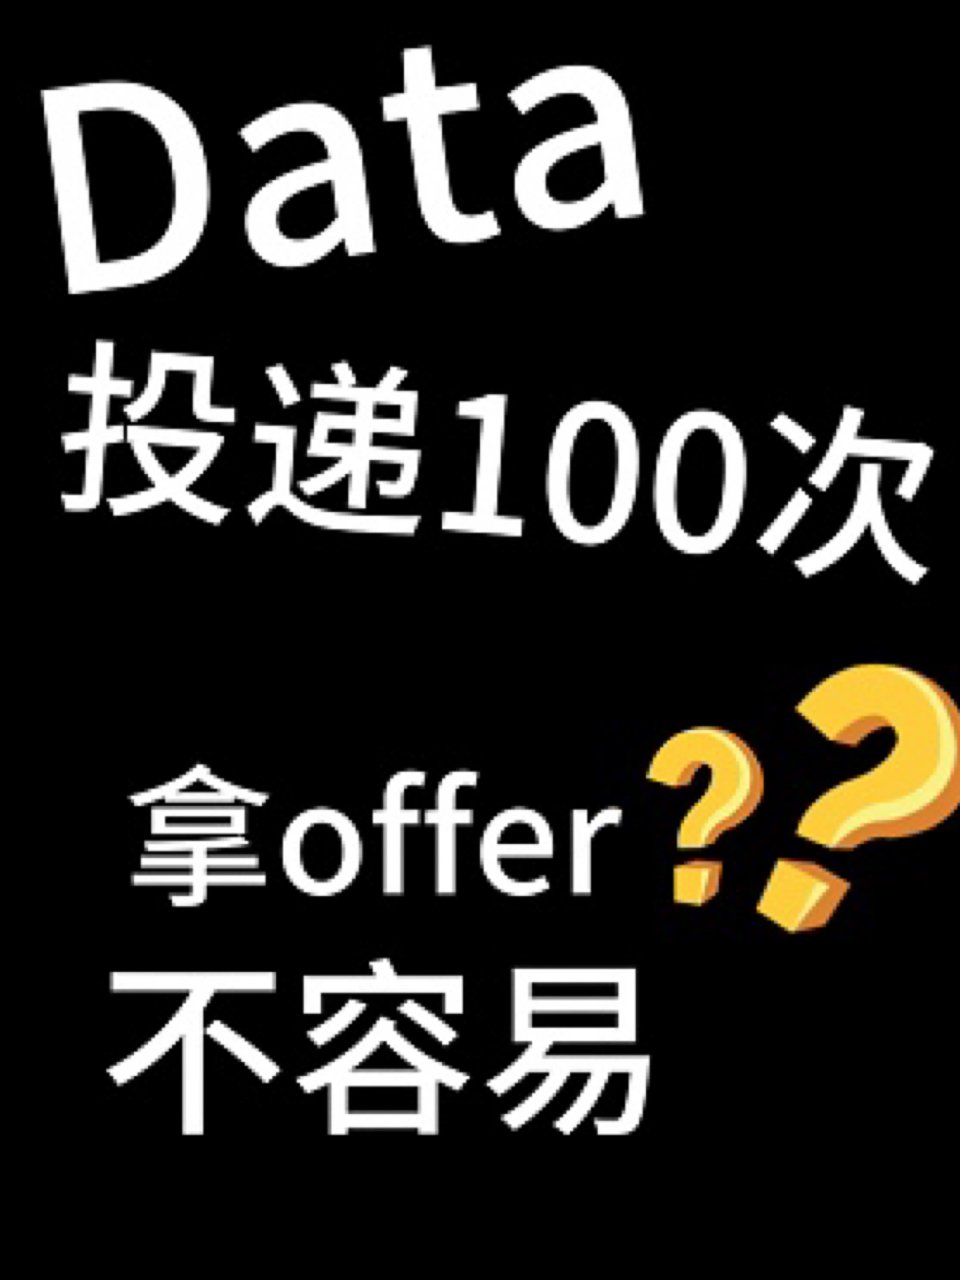 data投递100次拿offer不容易
...